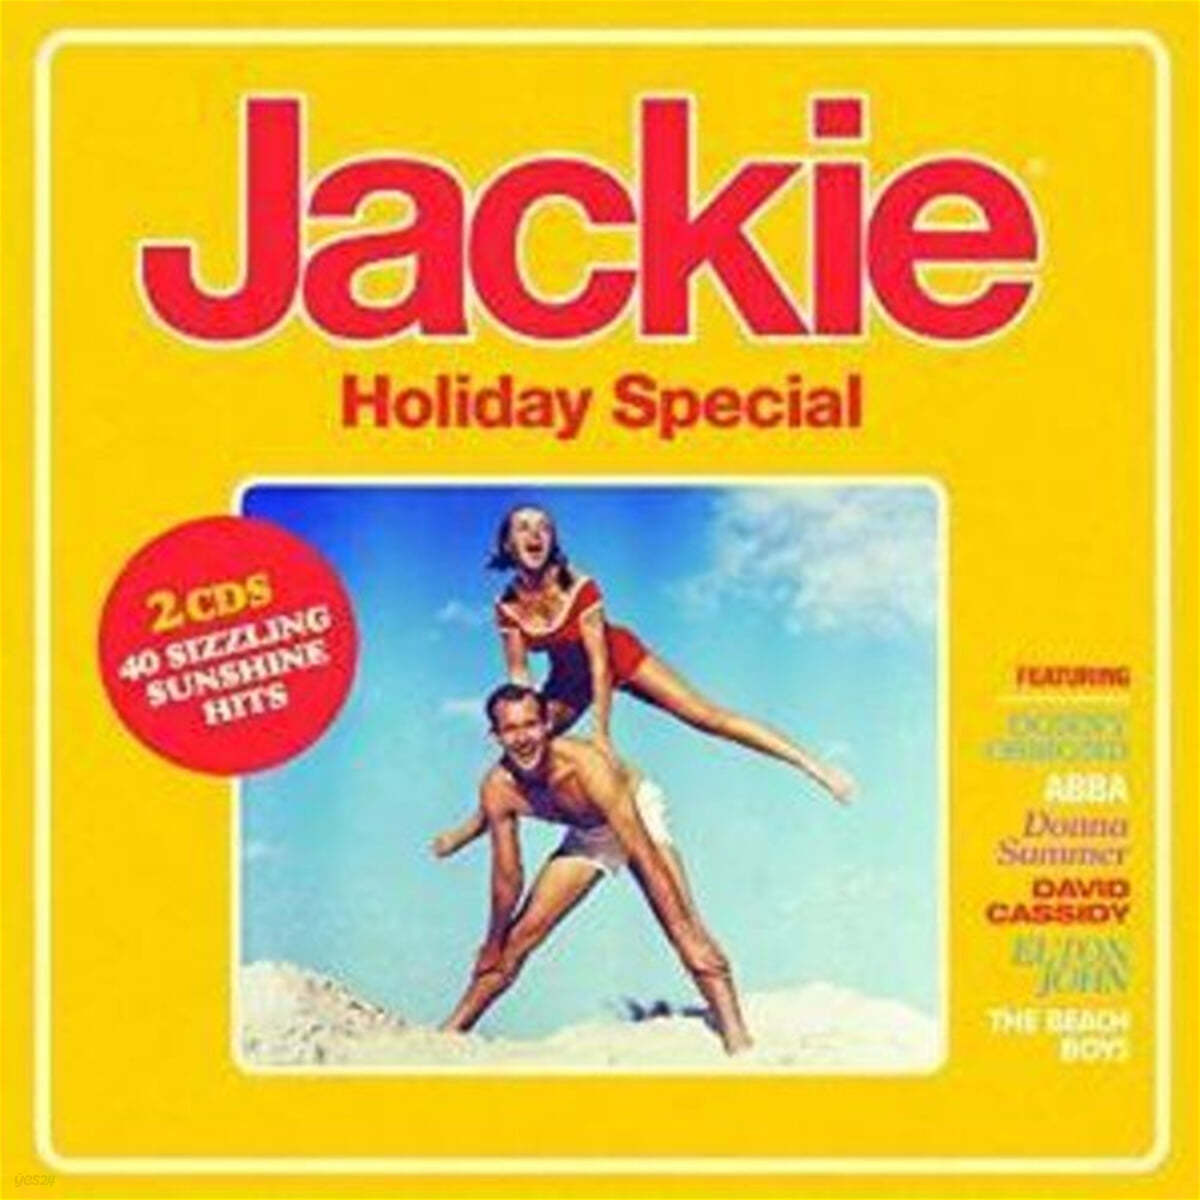 Jackie Magazine의 여름 음악 히트곡 모음집 (Jackie Holiday Special: 40 Sizzling Sunshine Hits)